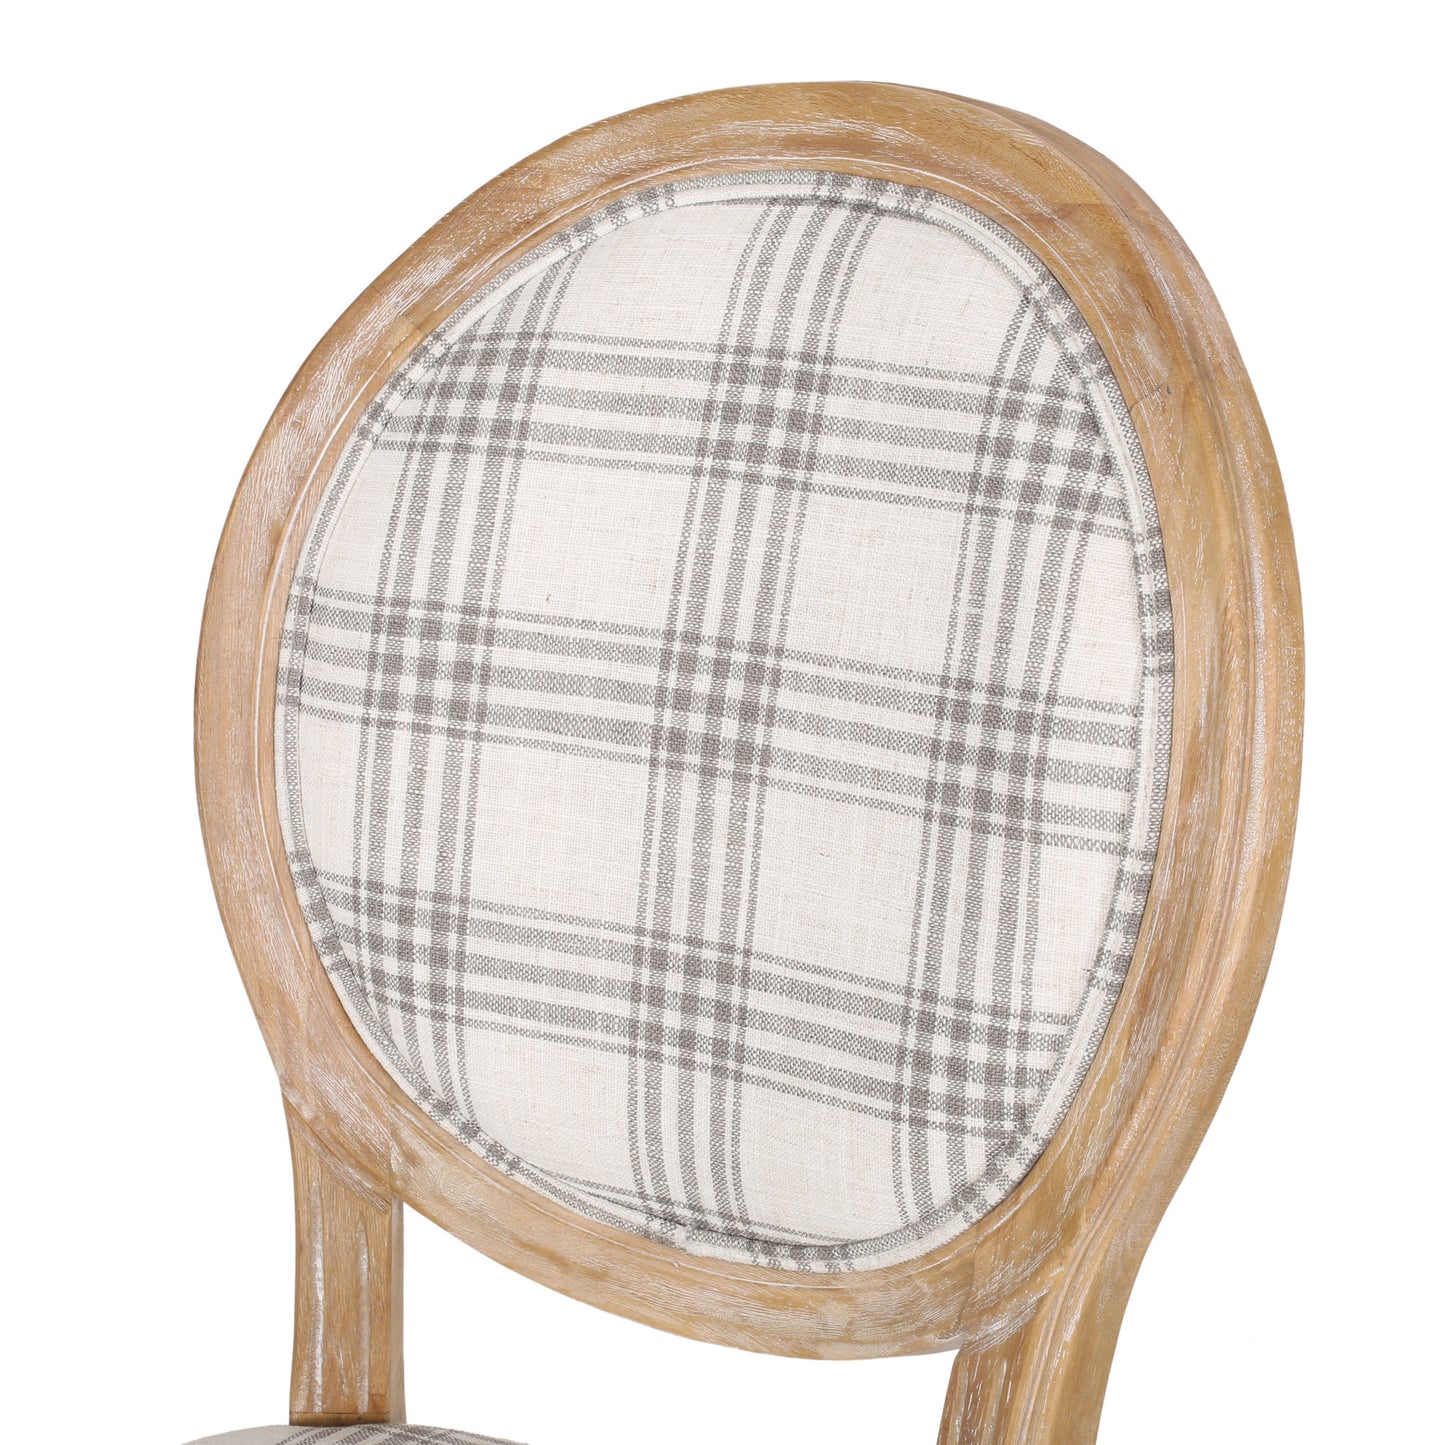 Lariya French Country Fabric Dining Chairs